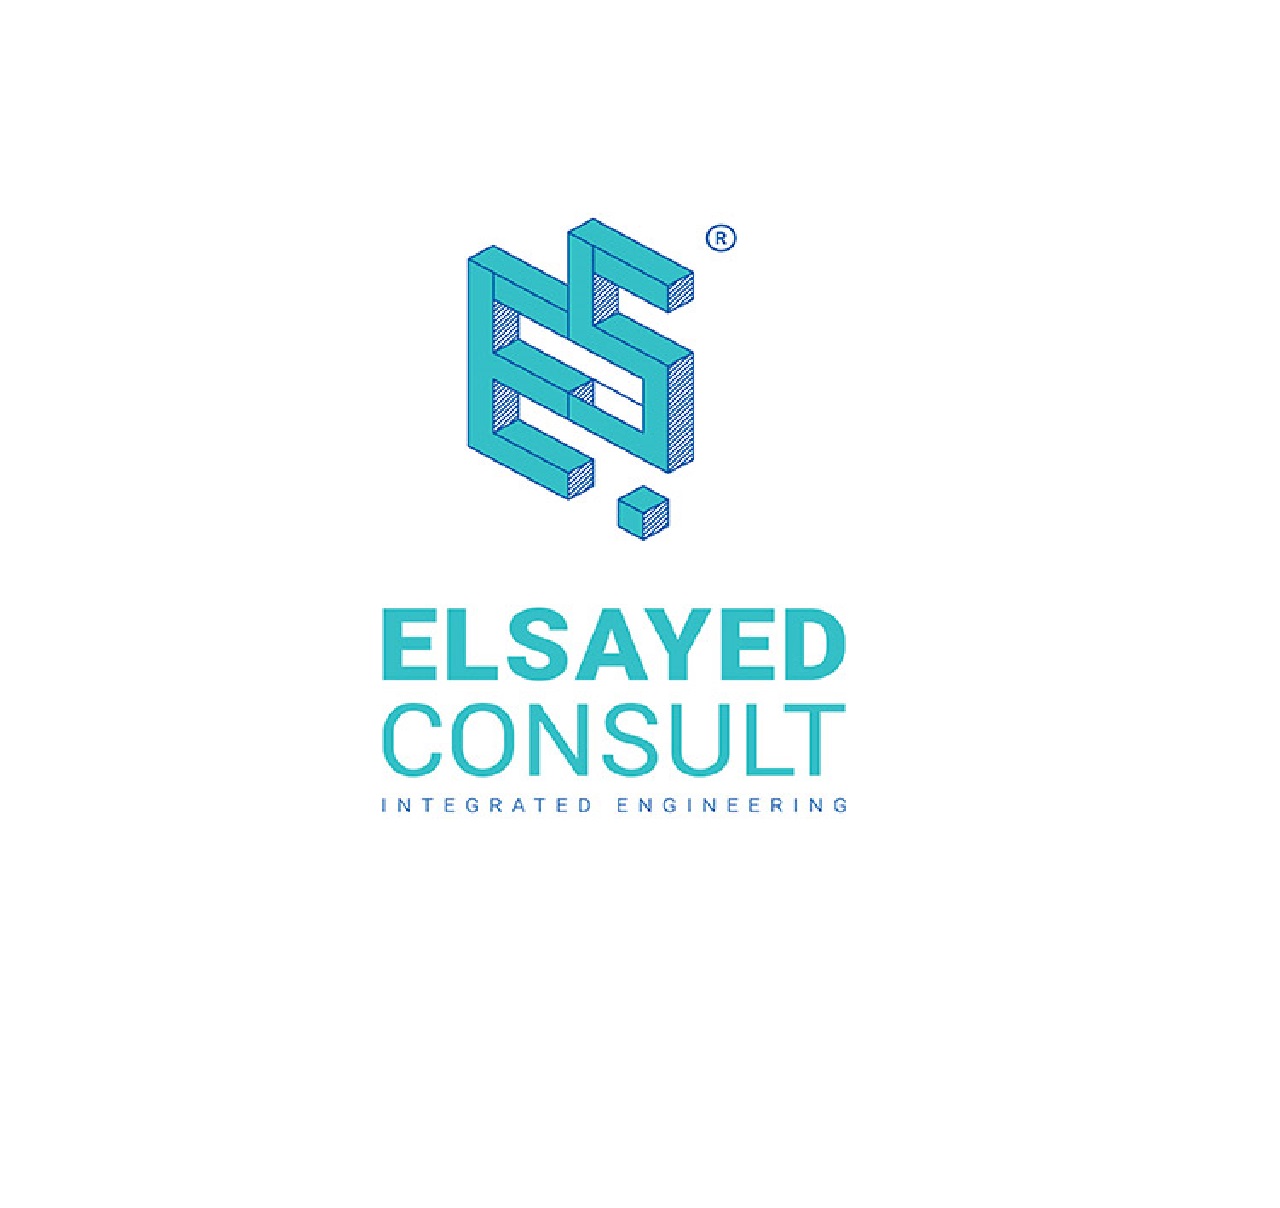 Elsayed Consult